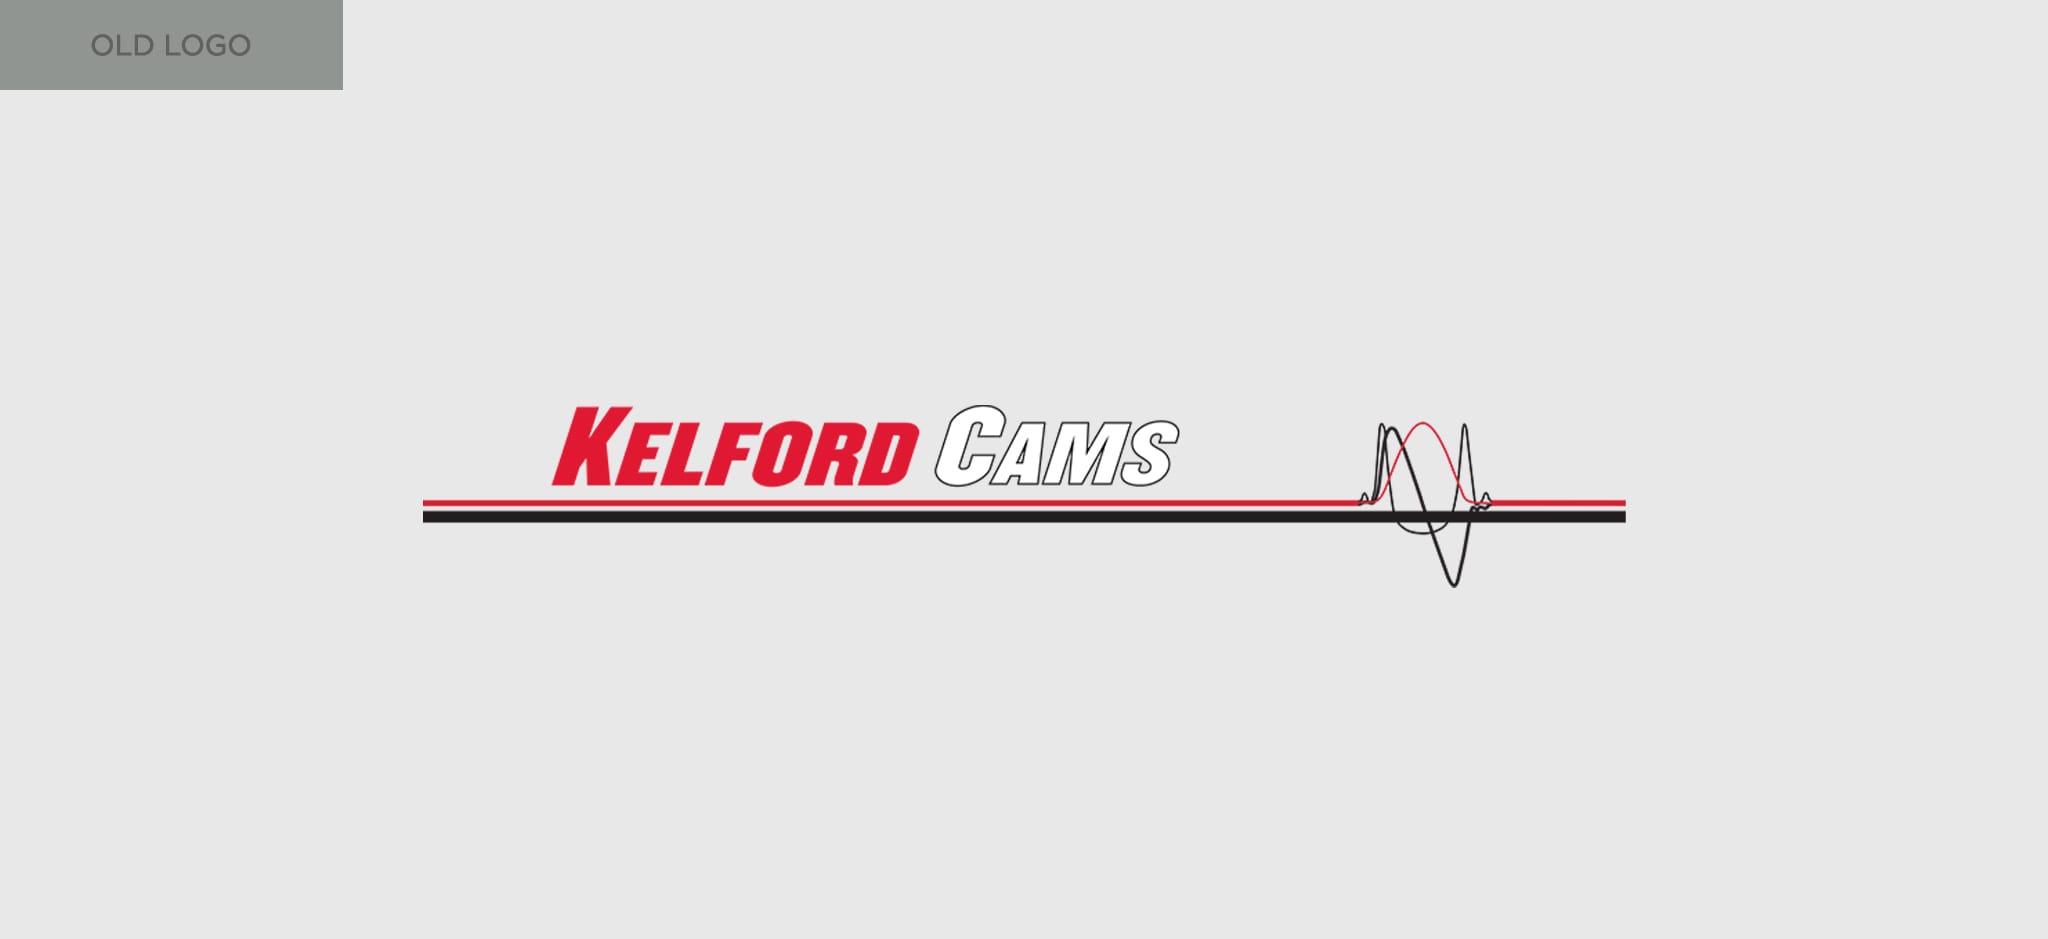 Kelford Cams old logo design